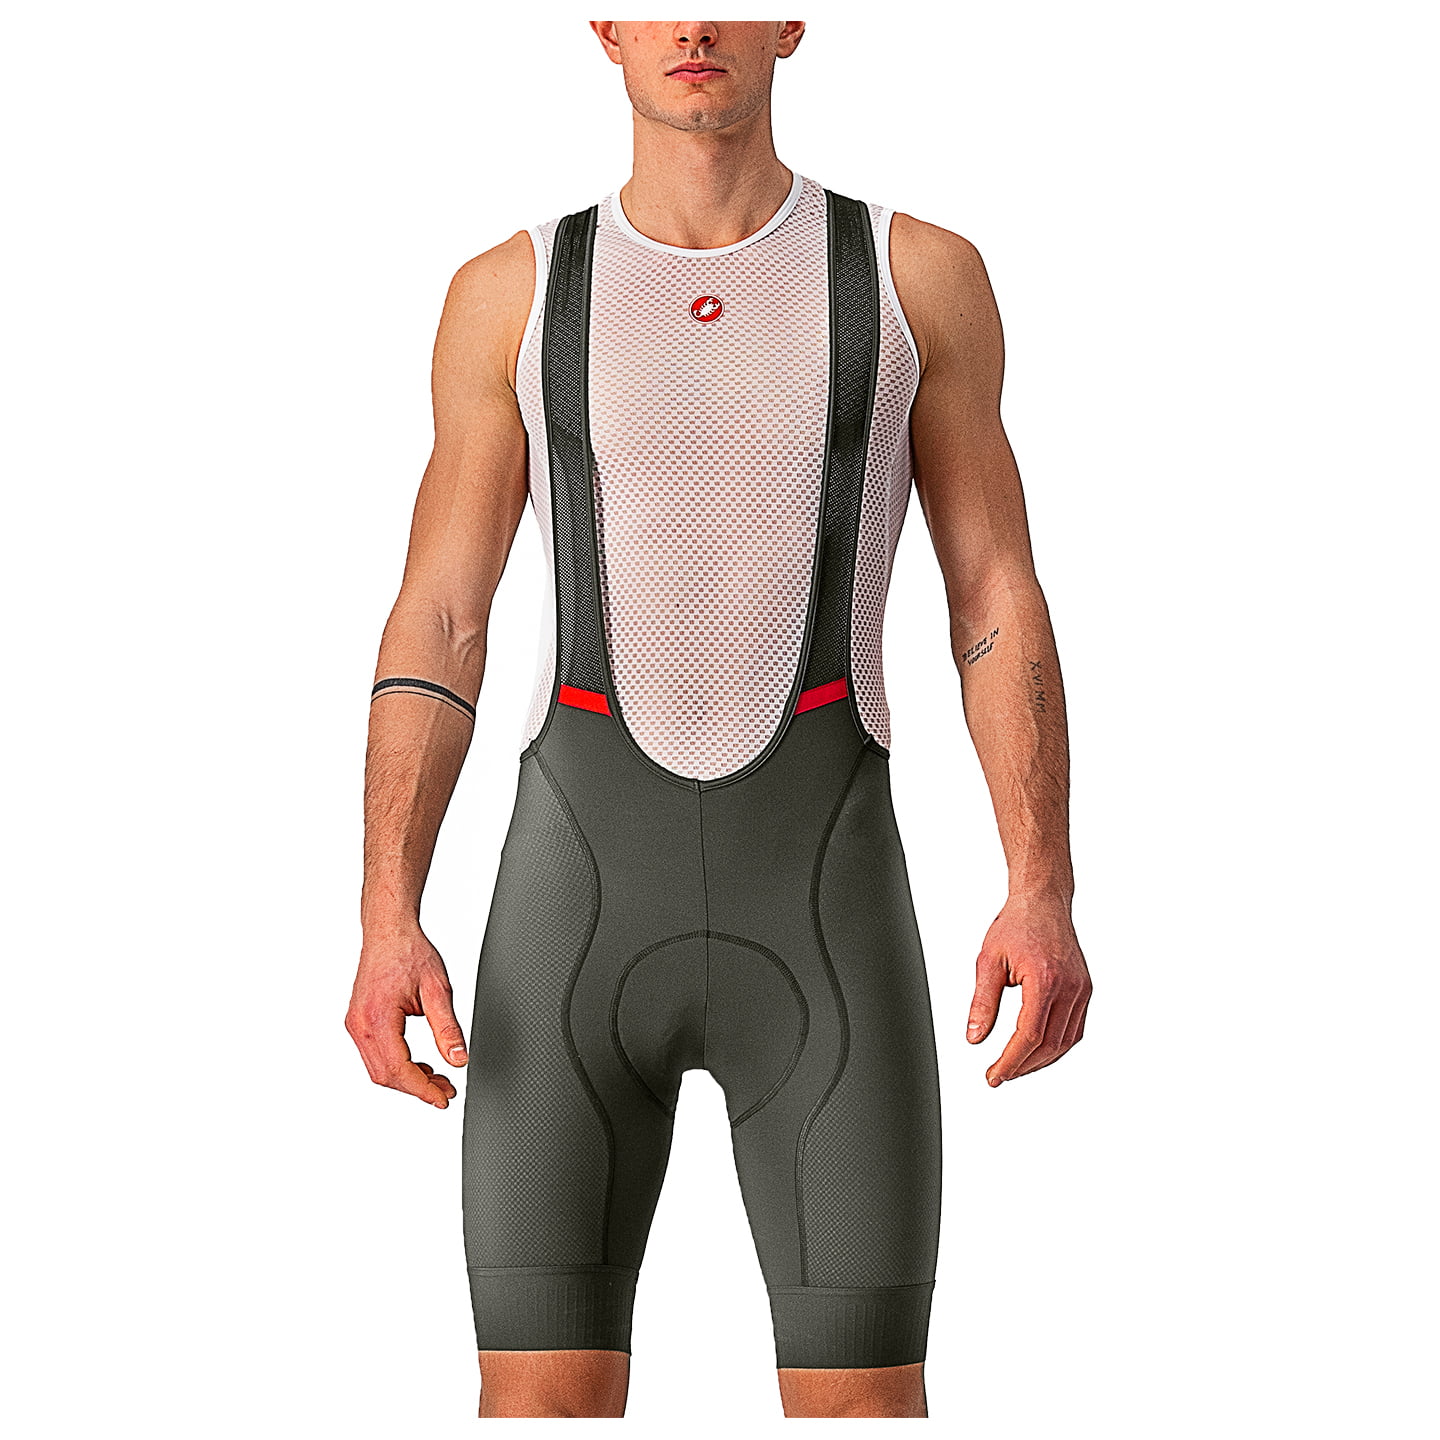 CASTELLI Competizione Bib Shorts Bib Shorts, for men, size M, Cycle shorts, Cycling clothing